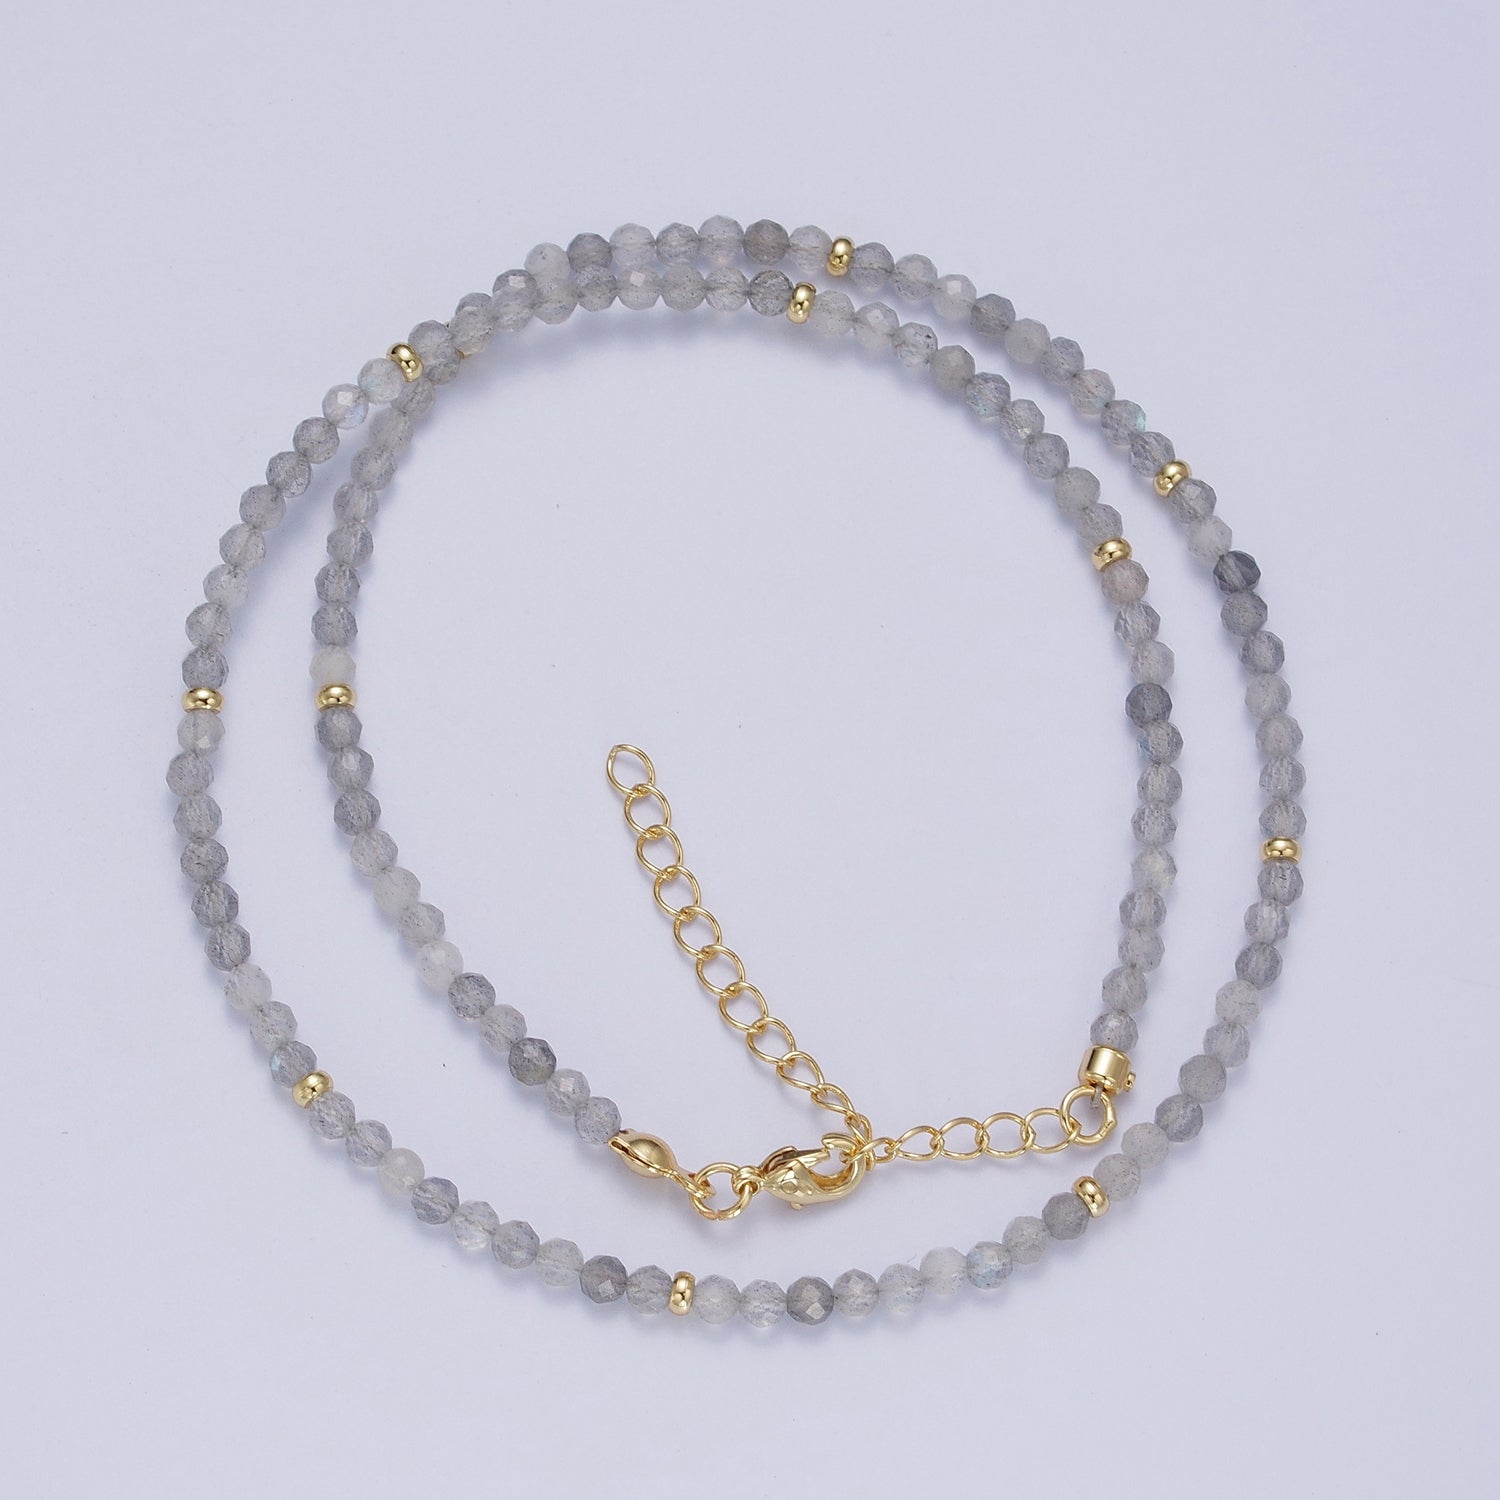 Dainty Beaded Necklace Tourmaline, Amazonite, Ruby, Amethyst, Moonstone Jewelry Handmade Jewelry WA-1219 WA-1220 WA-1241 WA-1242 WA-1243 - DLUXCA